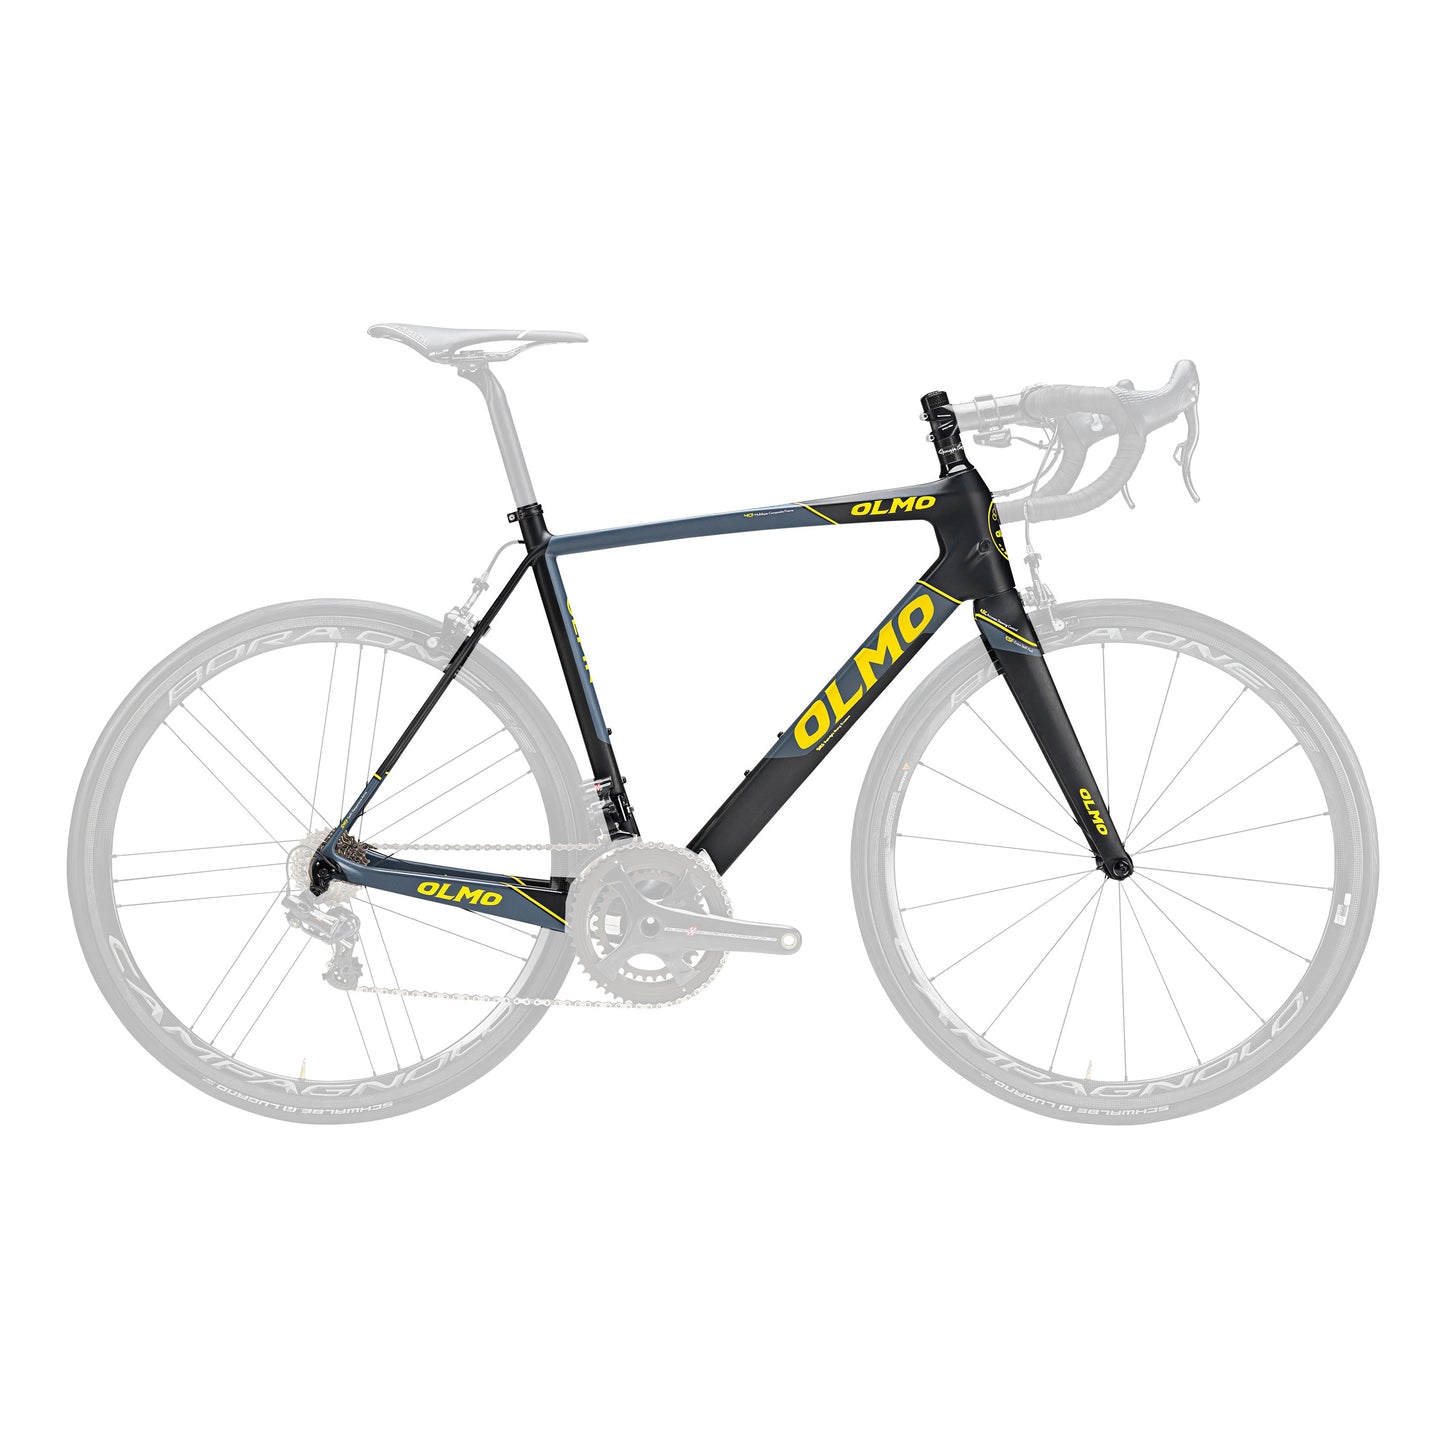 Olmo Gepin Carbon Fiber Bicycle Frame - Black/Yellow